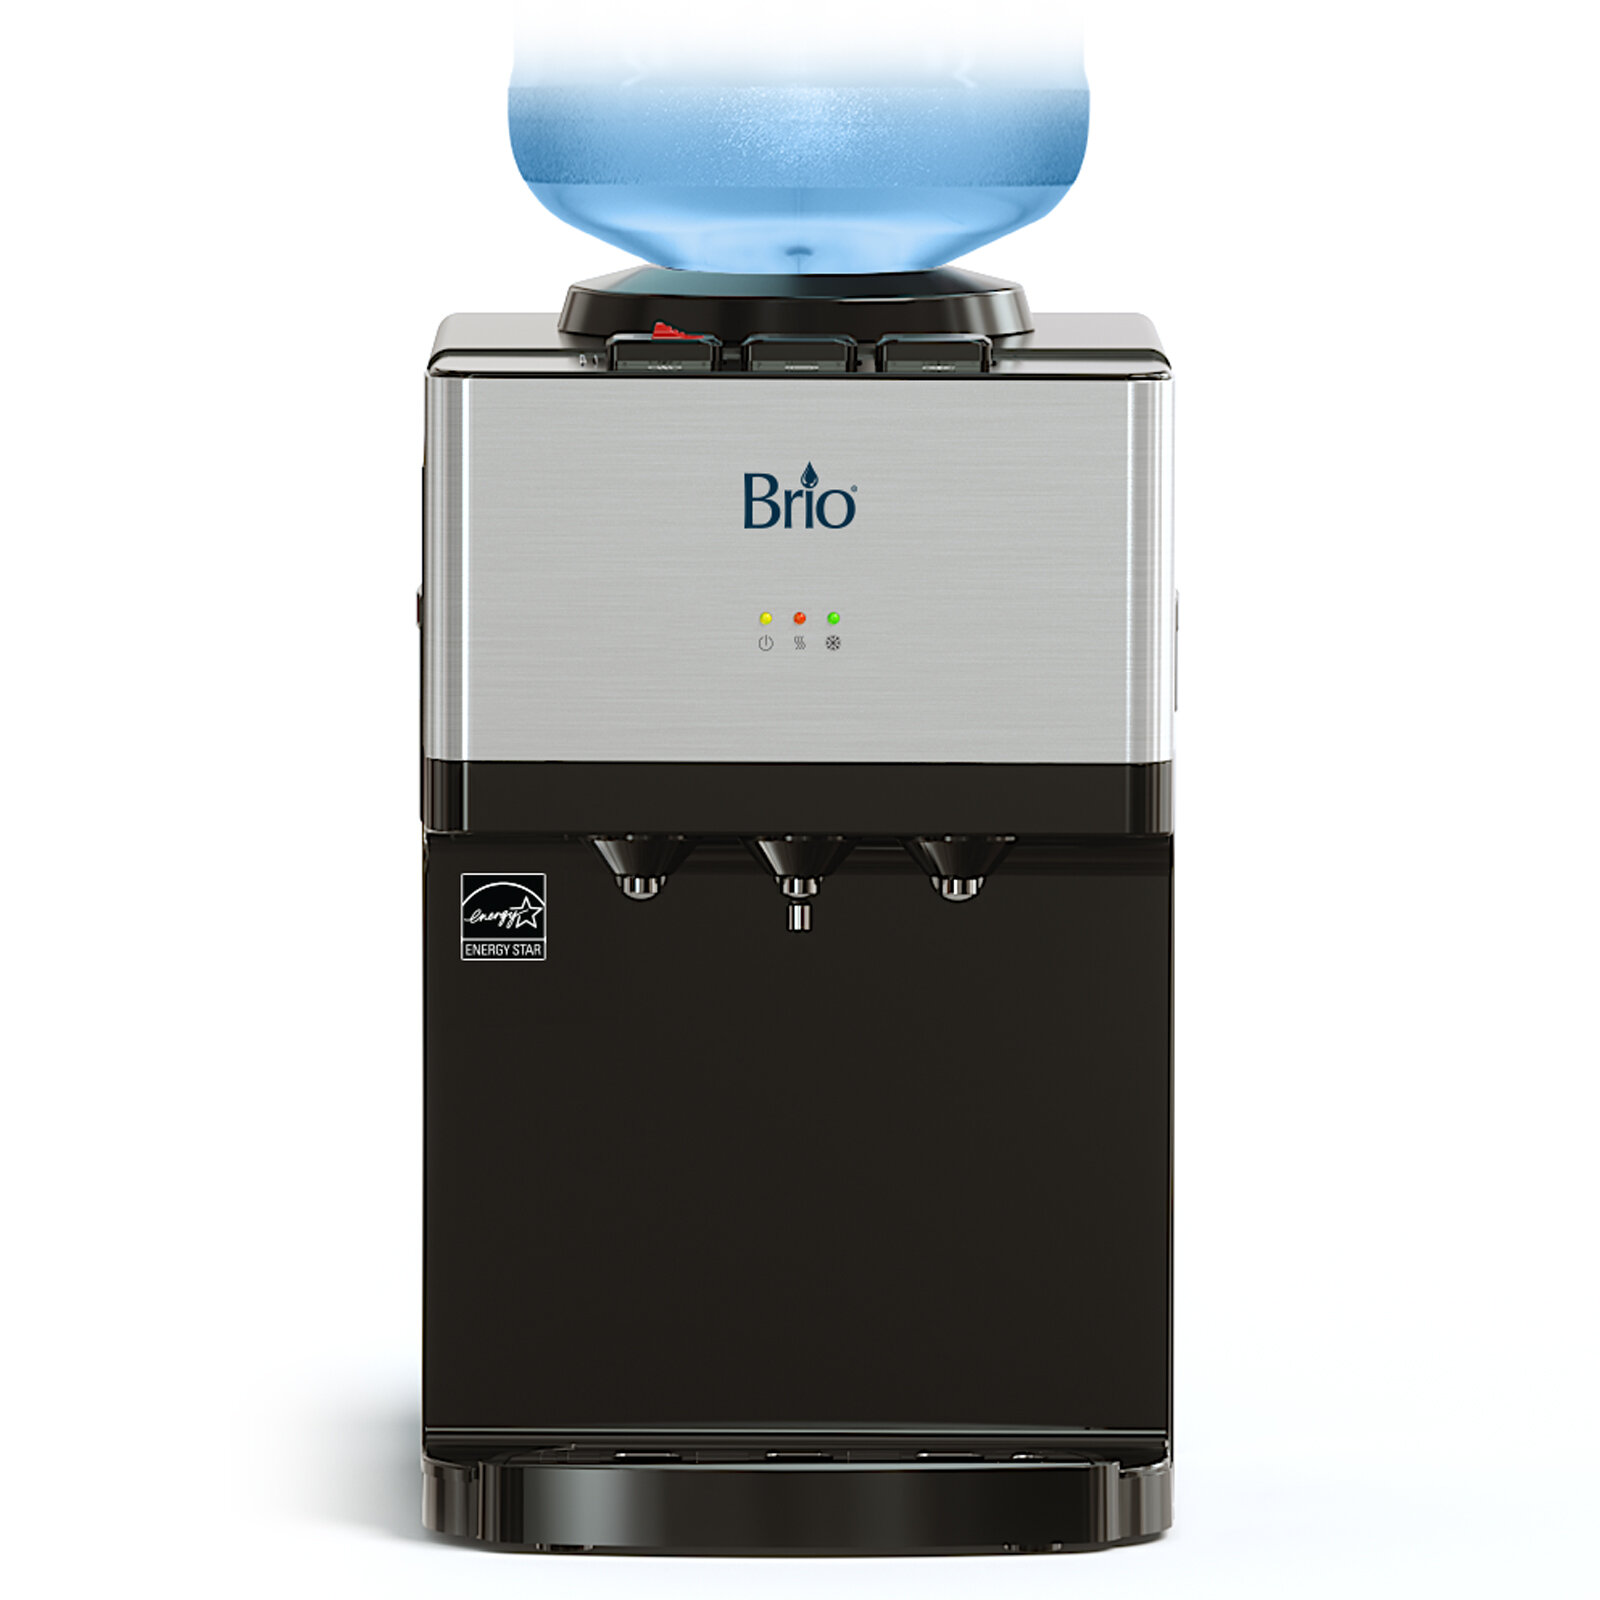 Aqua Optima Countertop Instant Hot & Cold Filtered Water Dispenser